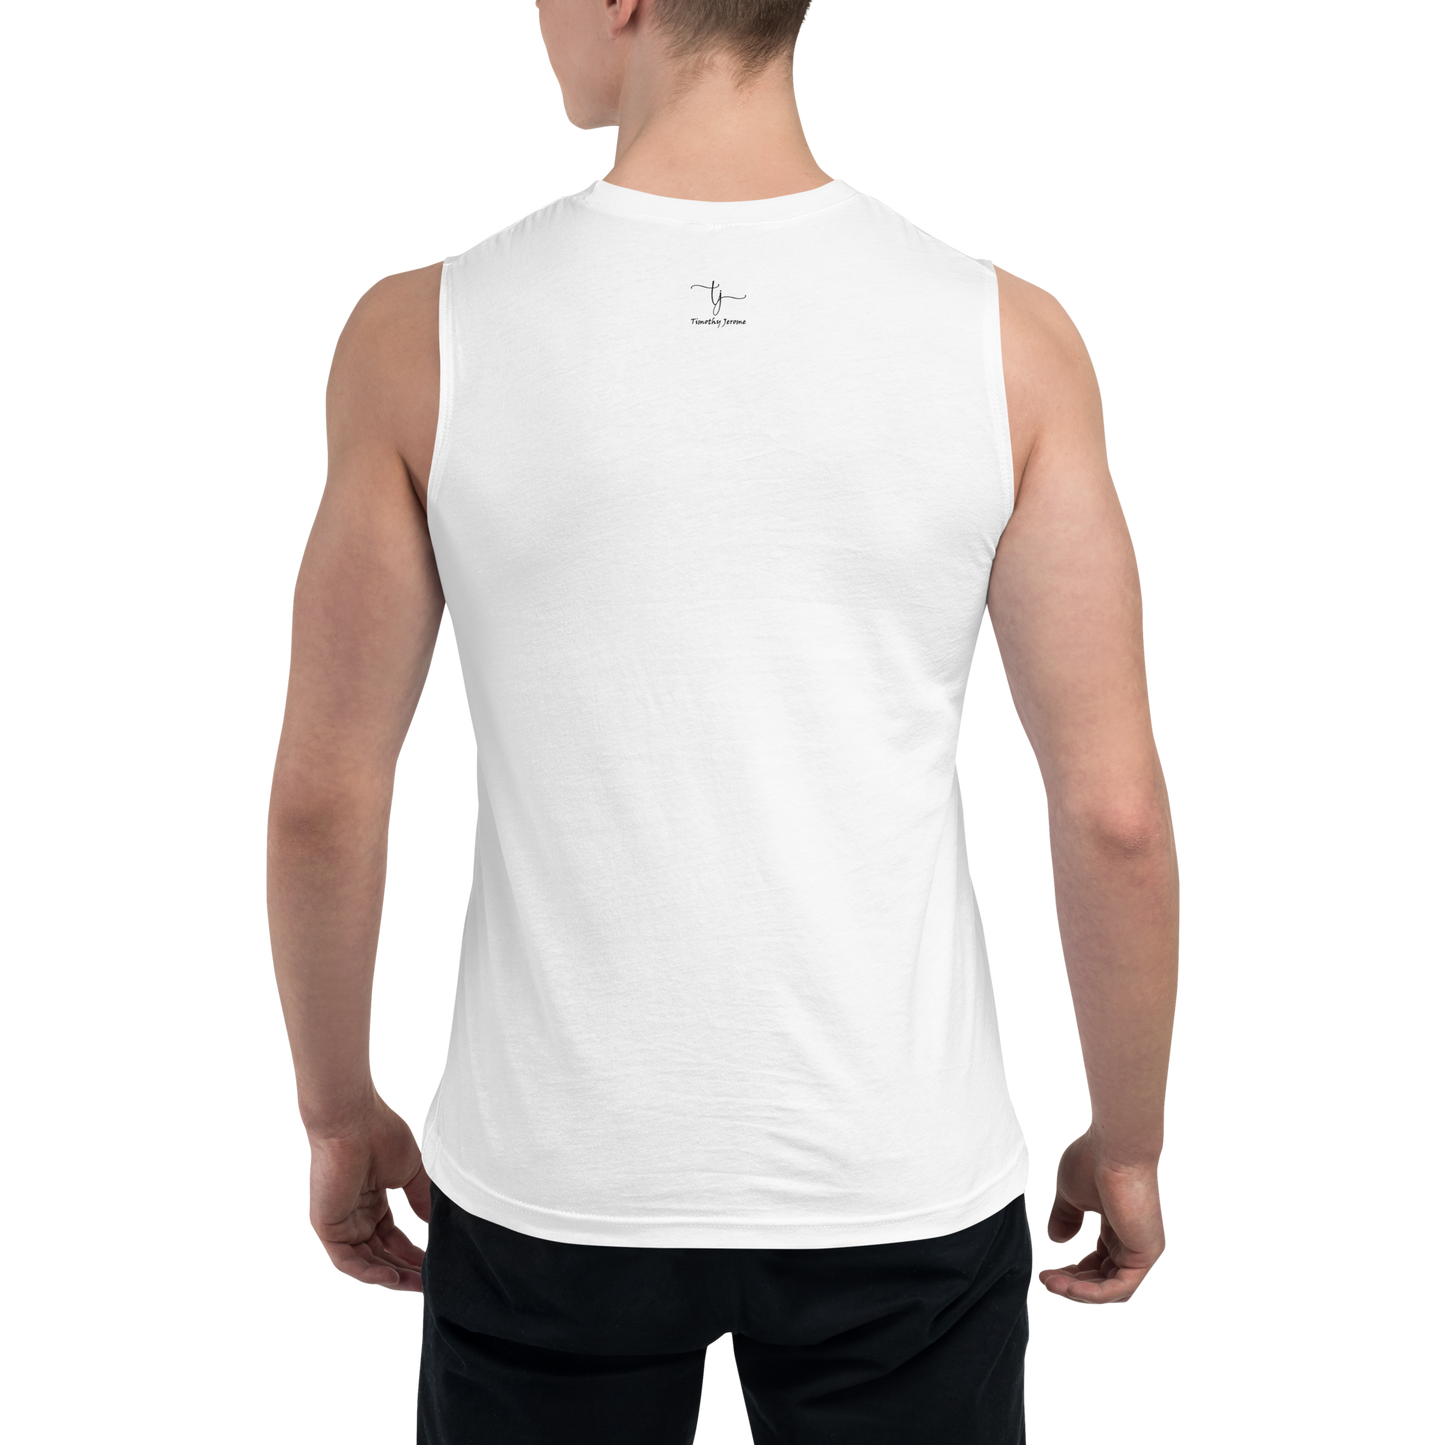 Men's White Muscle Shirt small - 2XL